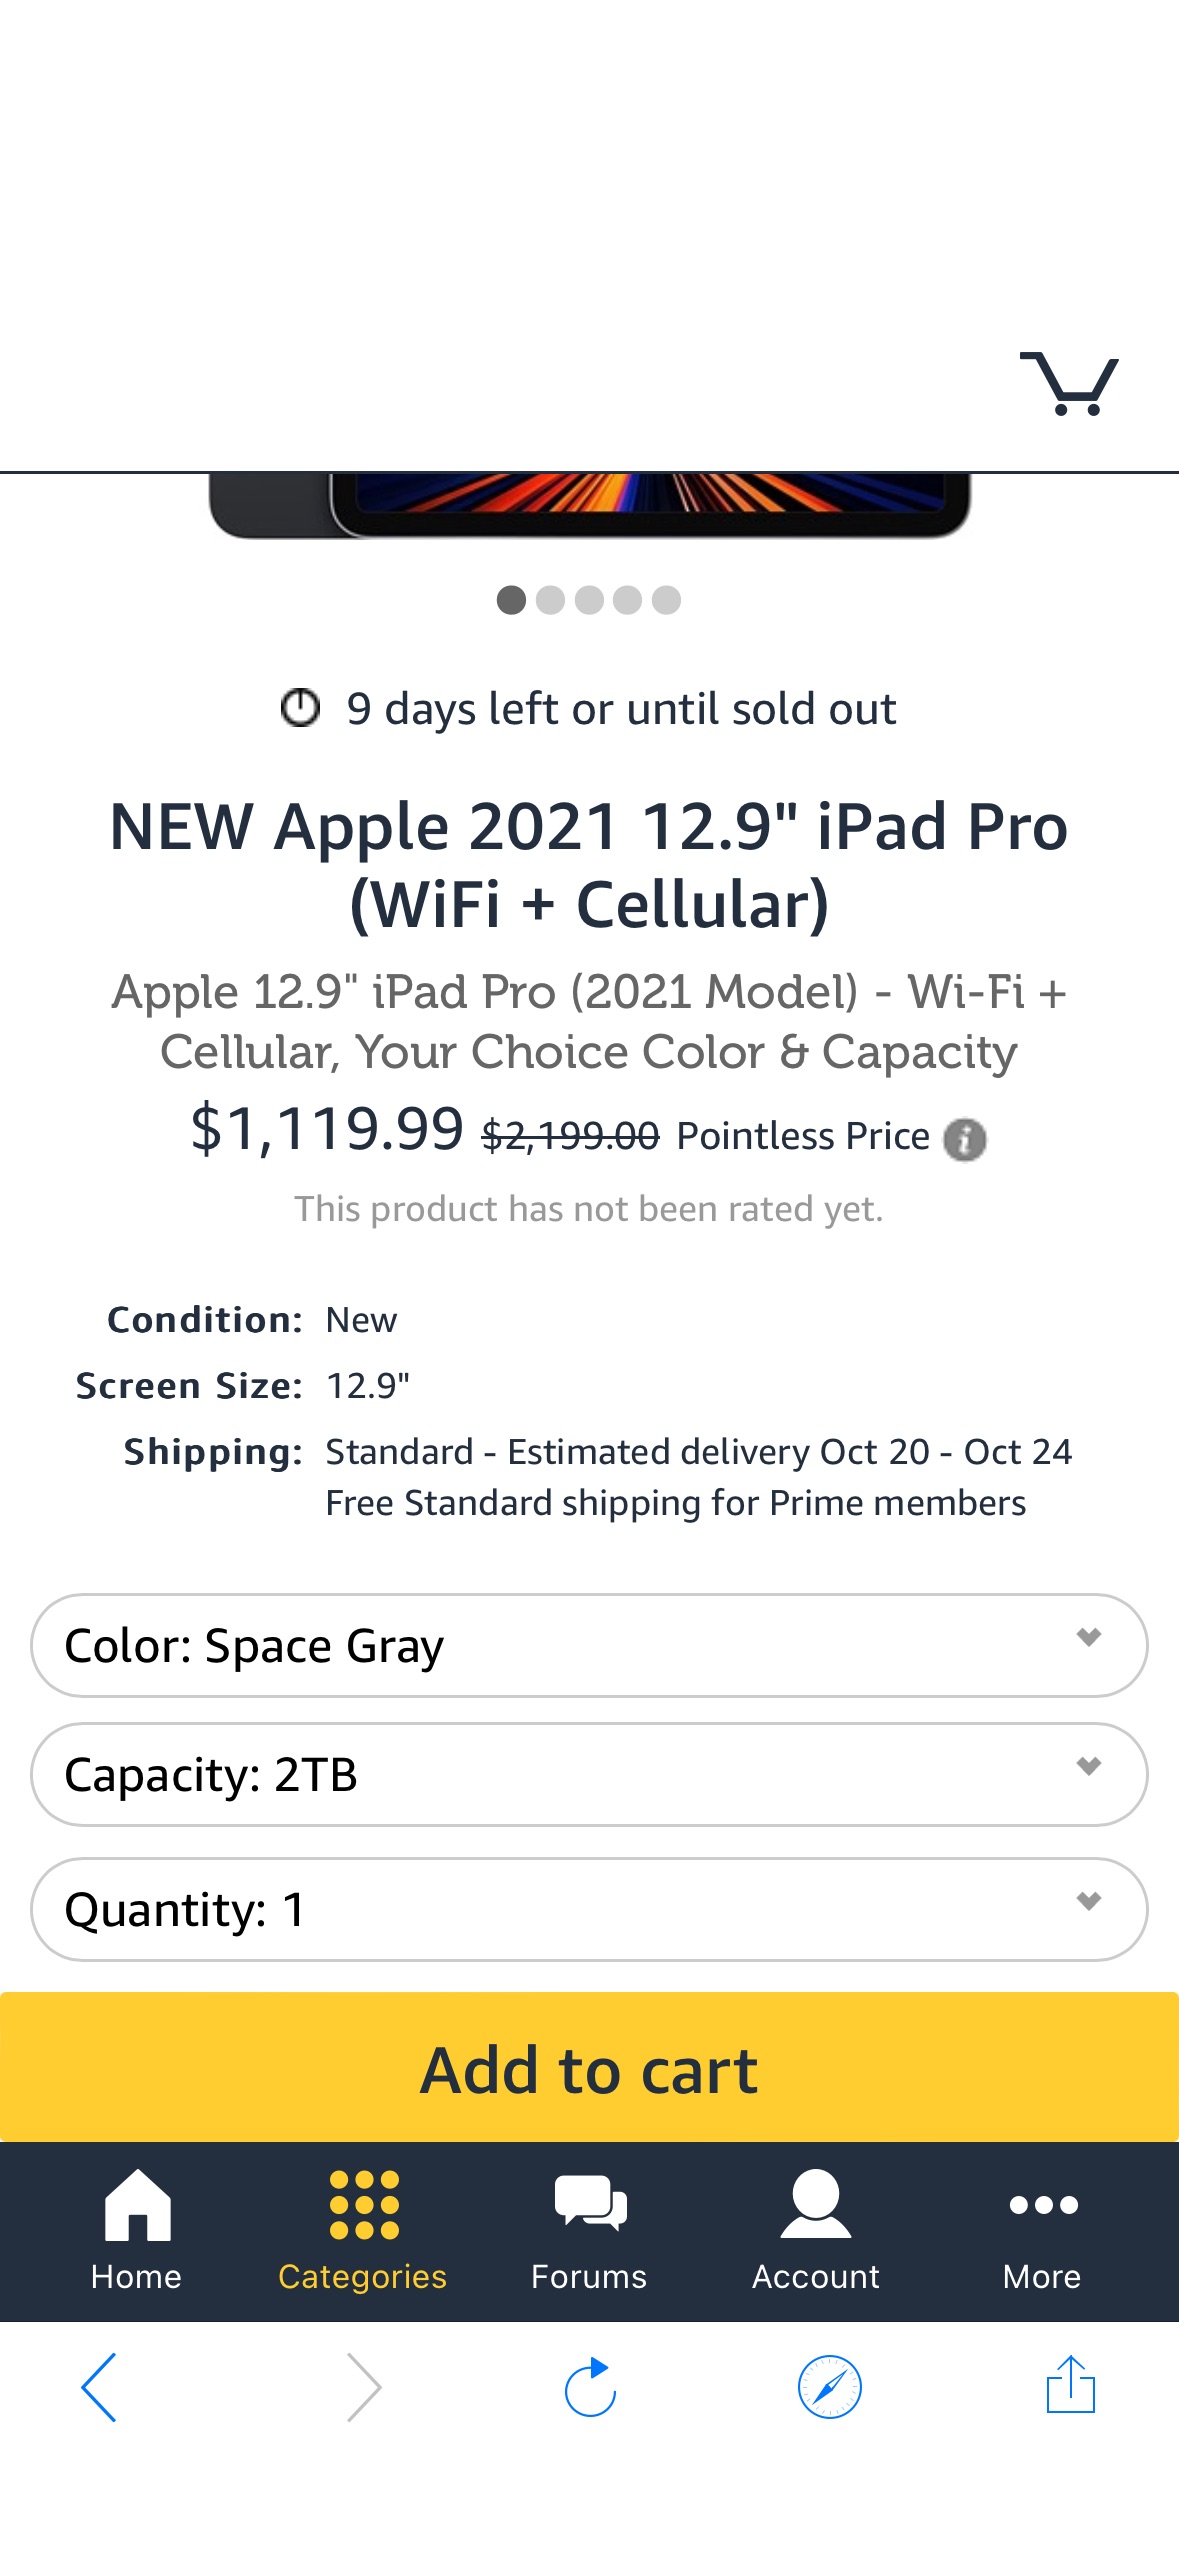 NEW Apple 2021 12.9" iPad Pro (WiFi + Cellular)